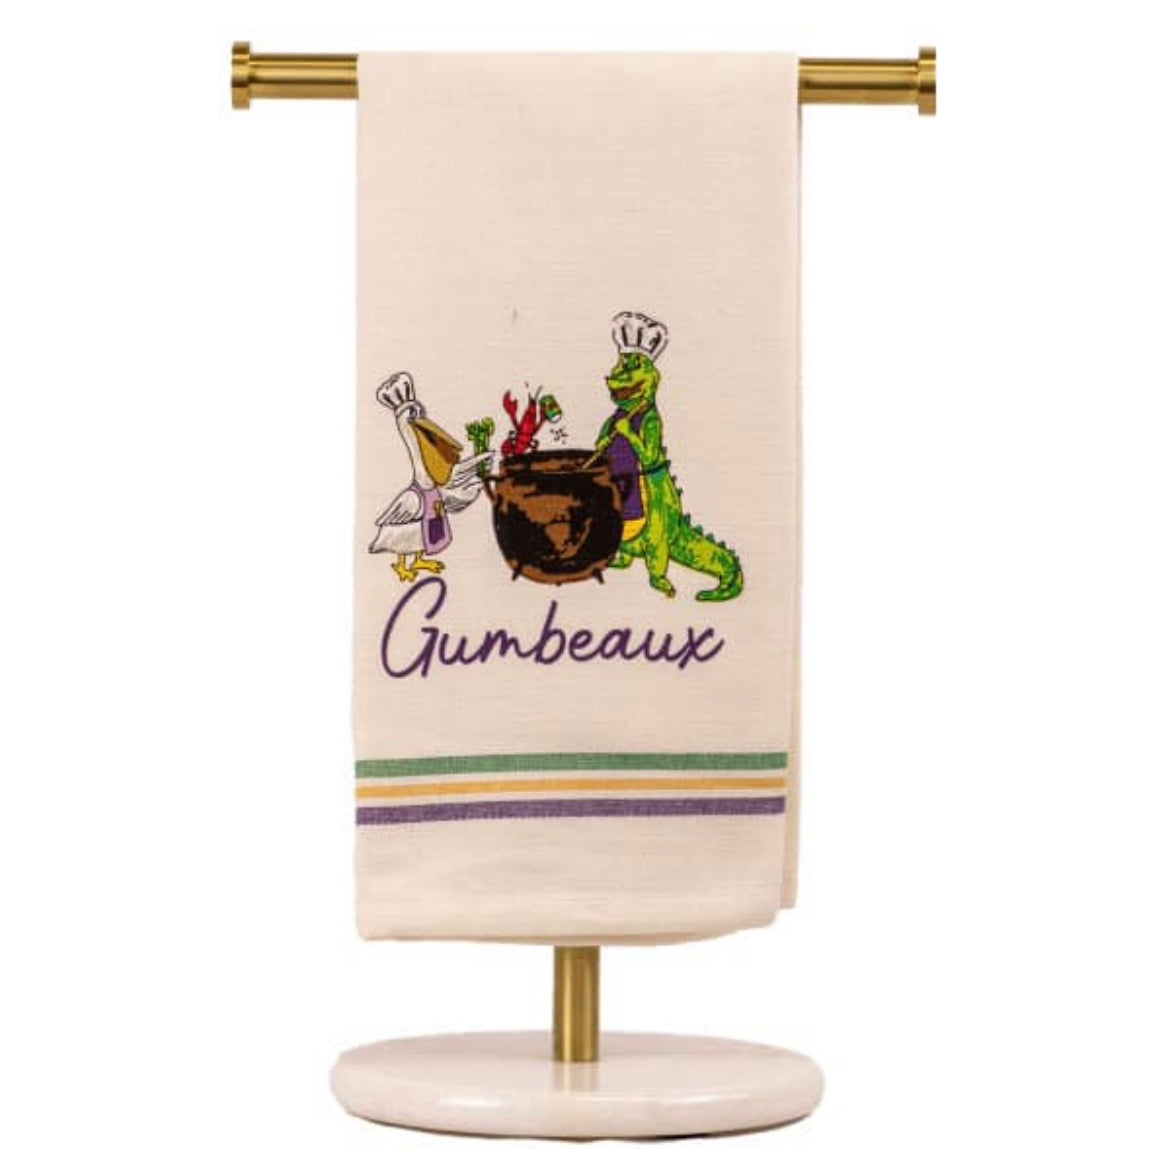 Gumbeaux Mardi Gras Towel